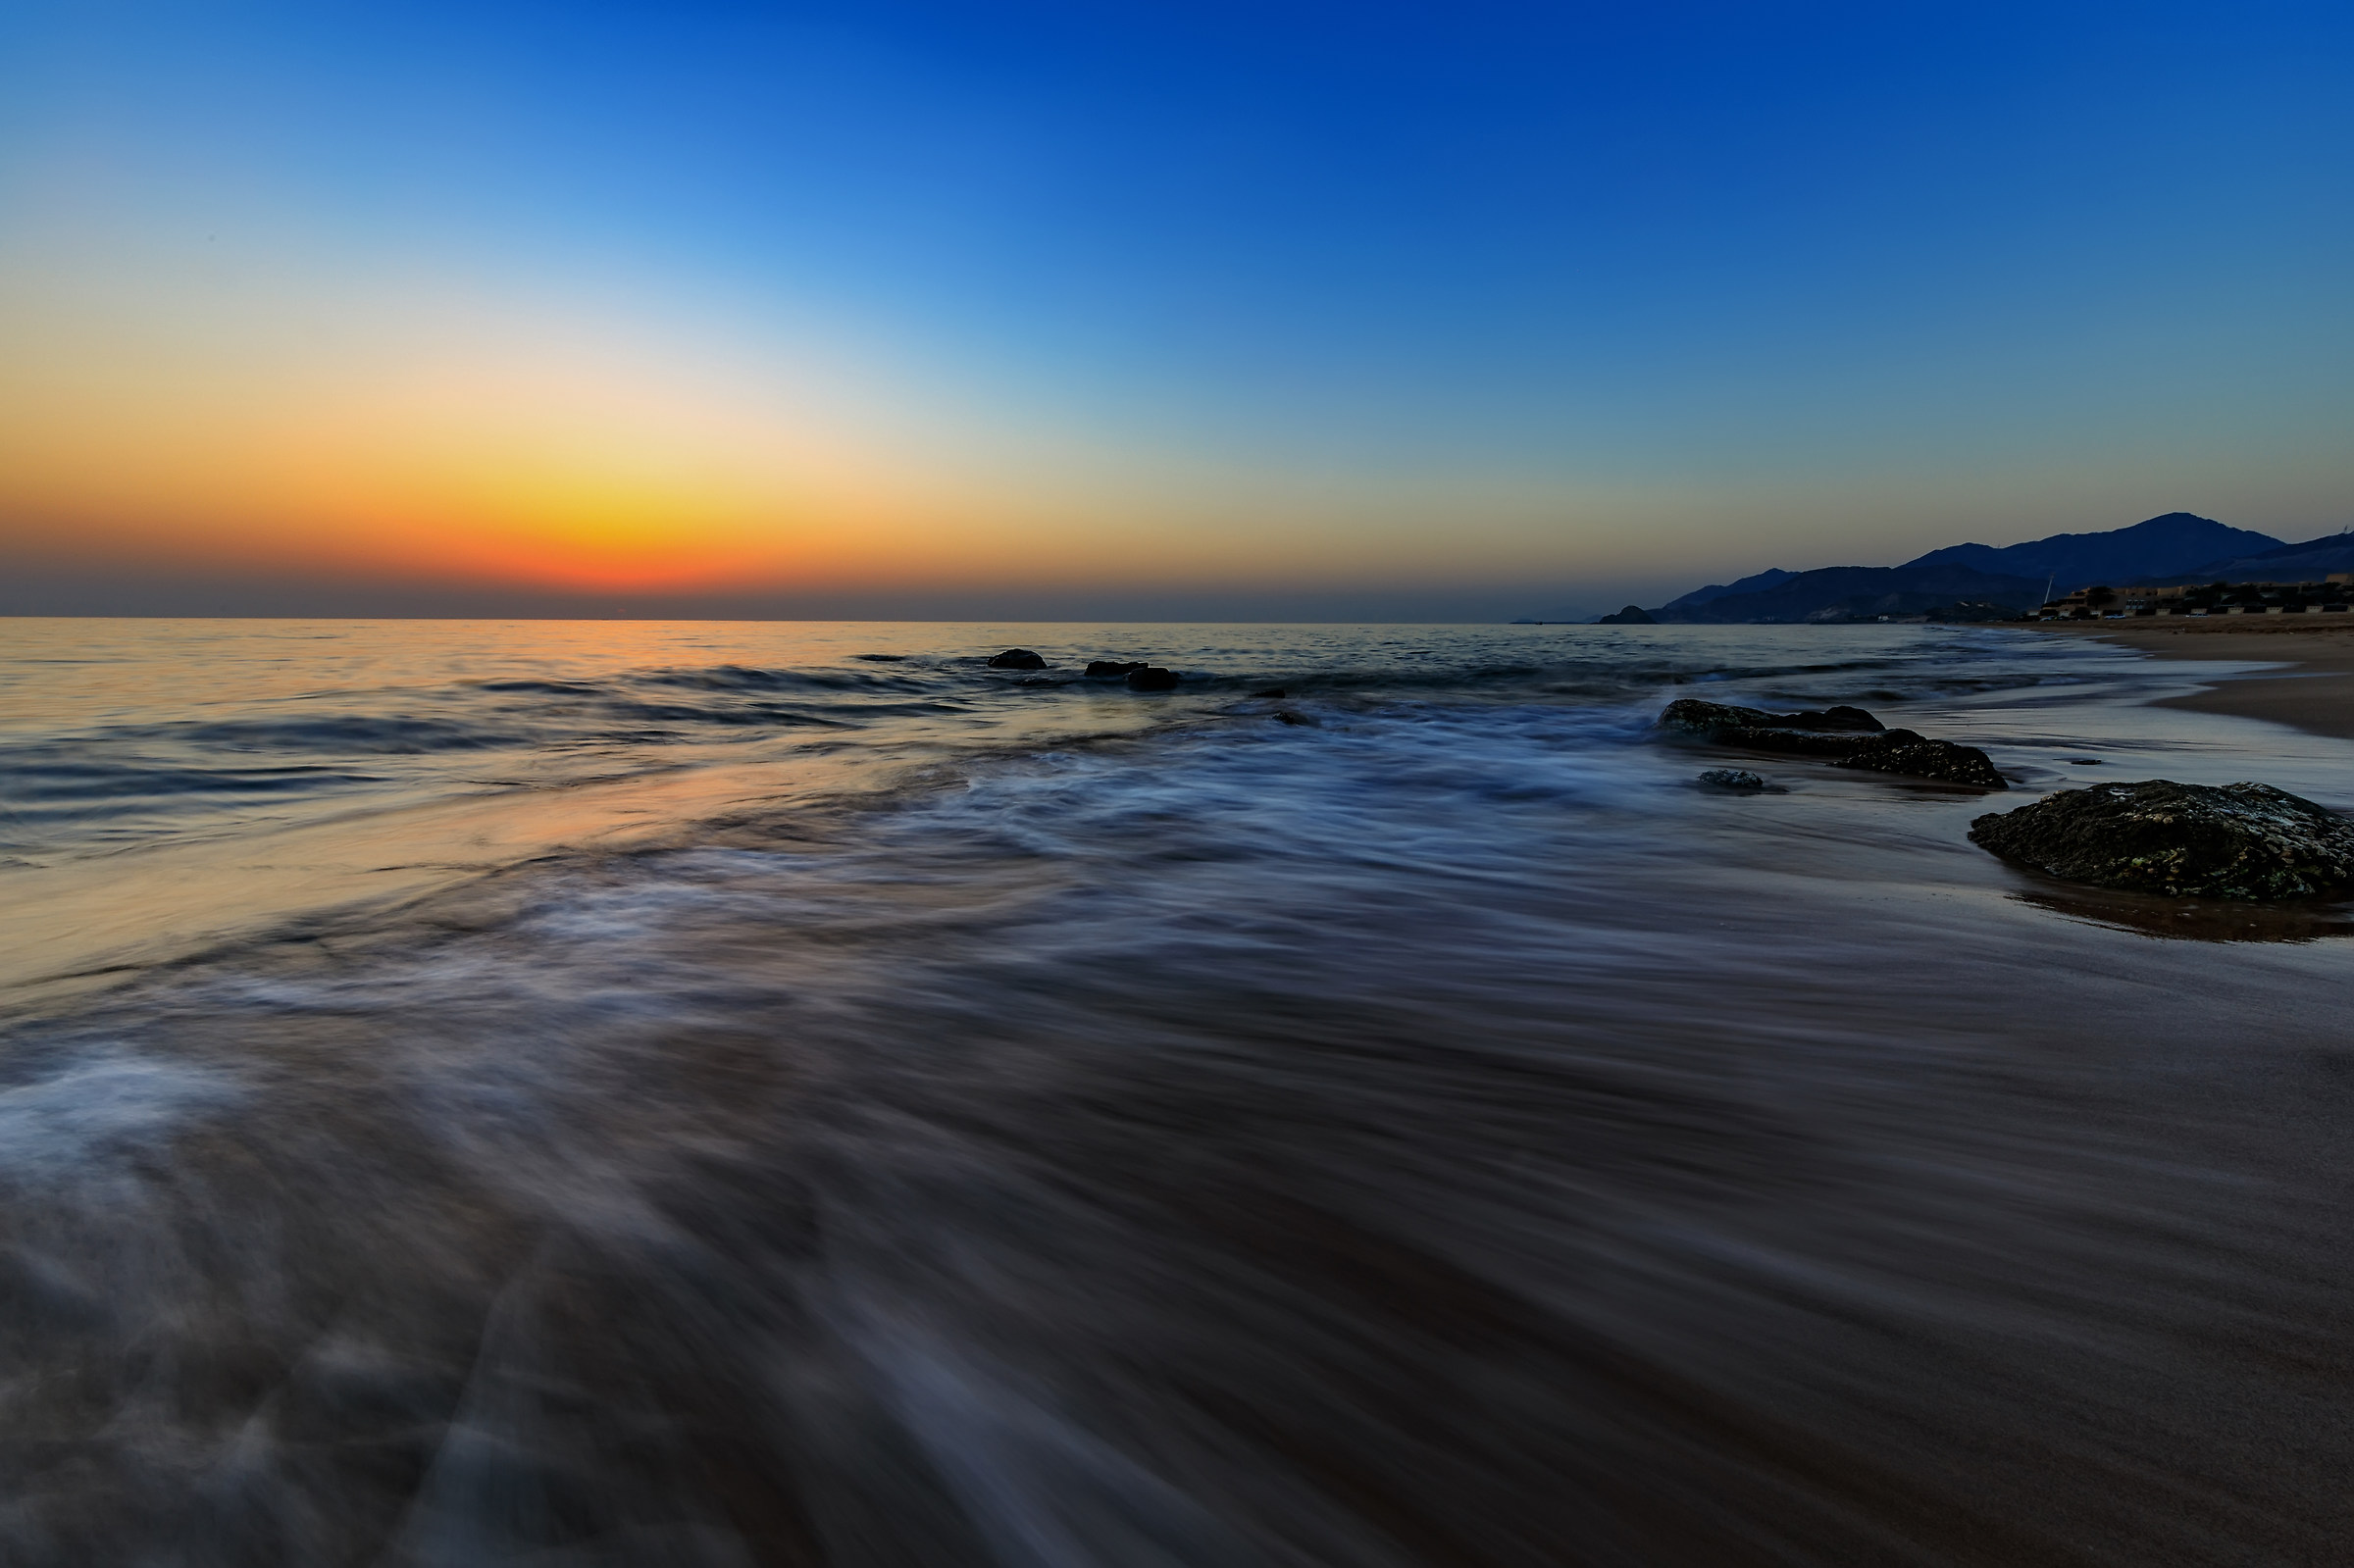 Sunrise over the Gulf of Oman...